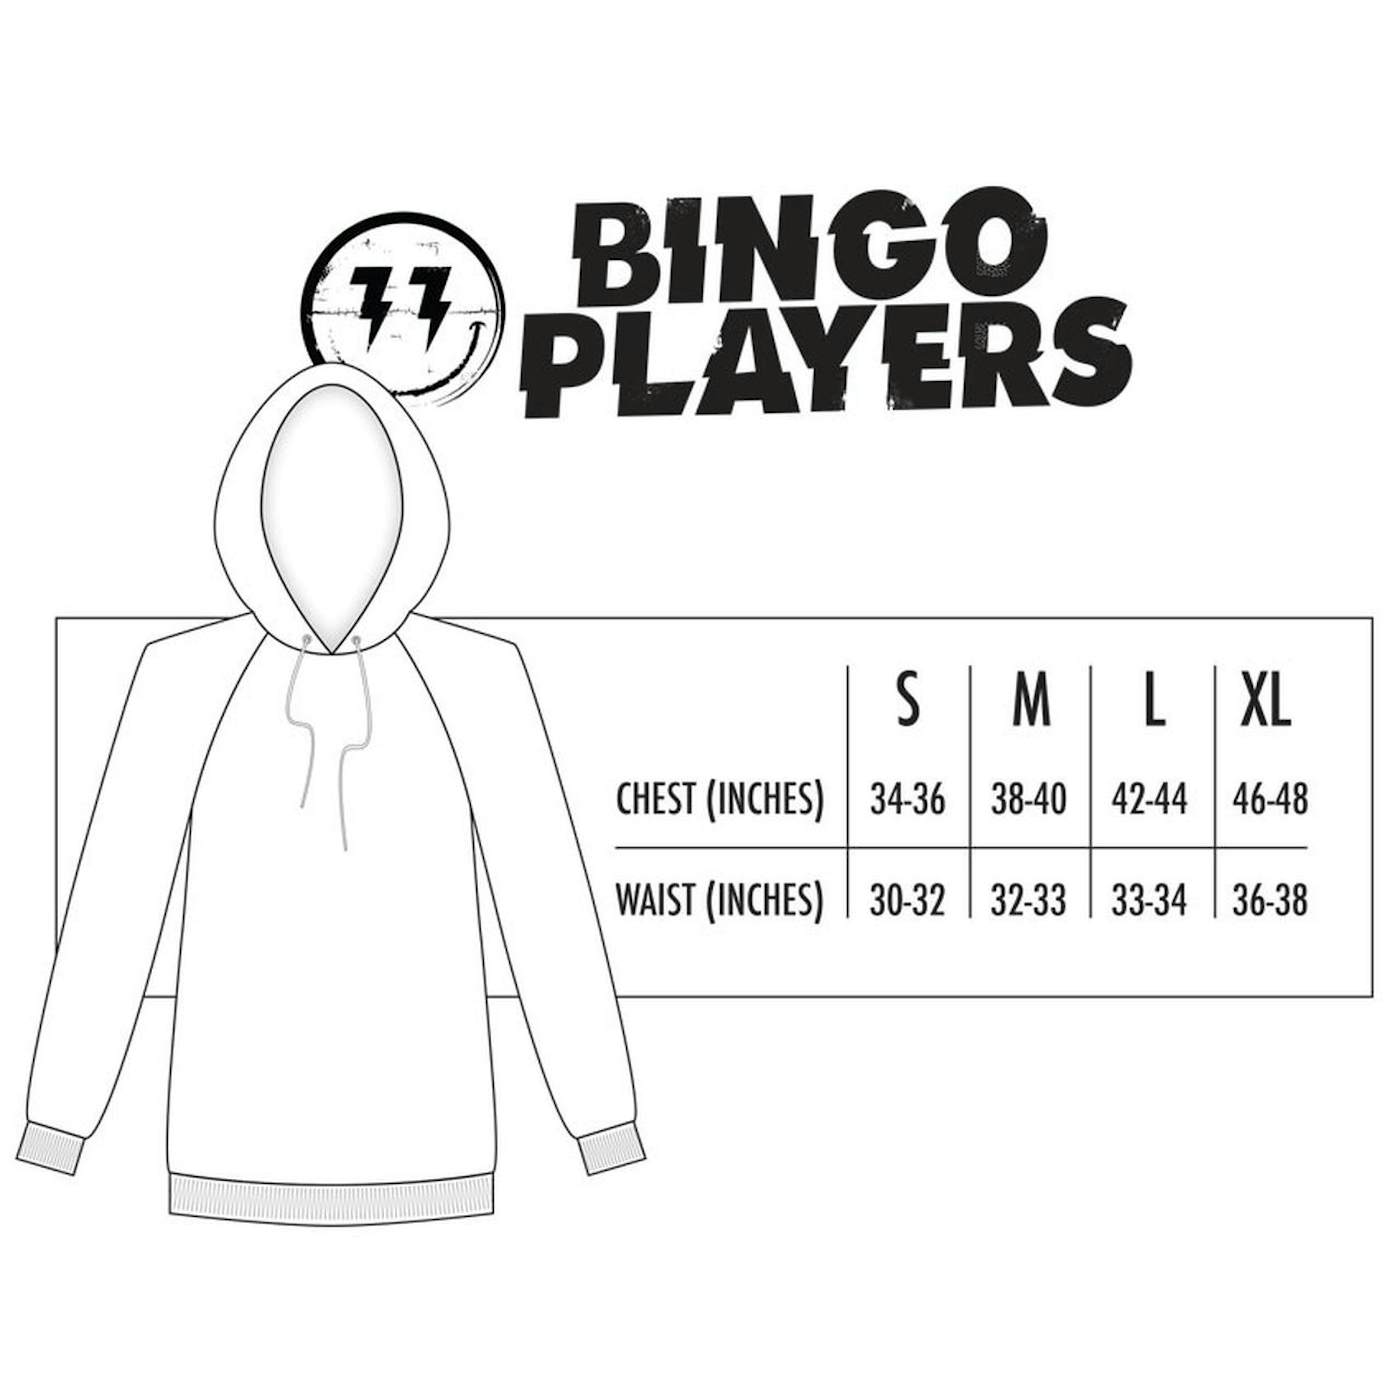 Bingo Players Smiley Hoodie